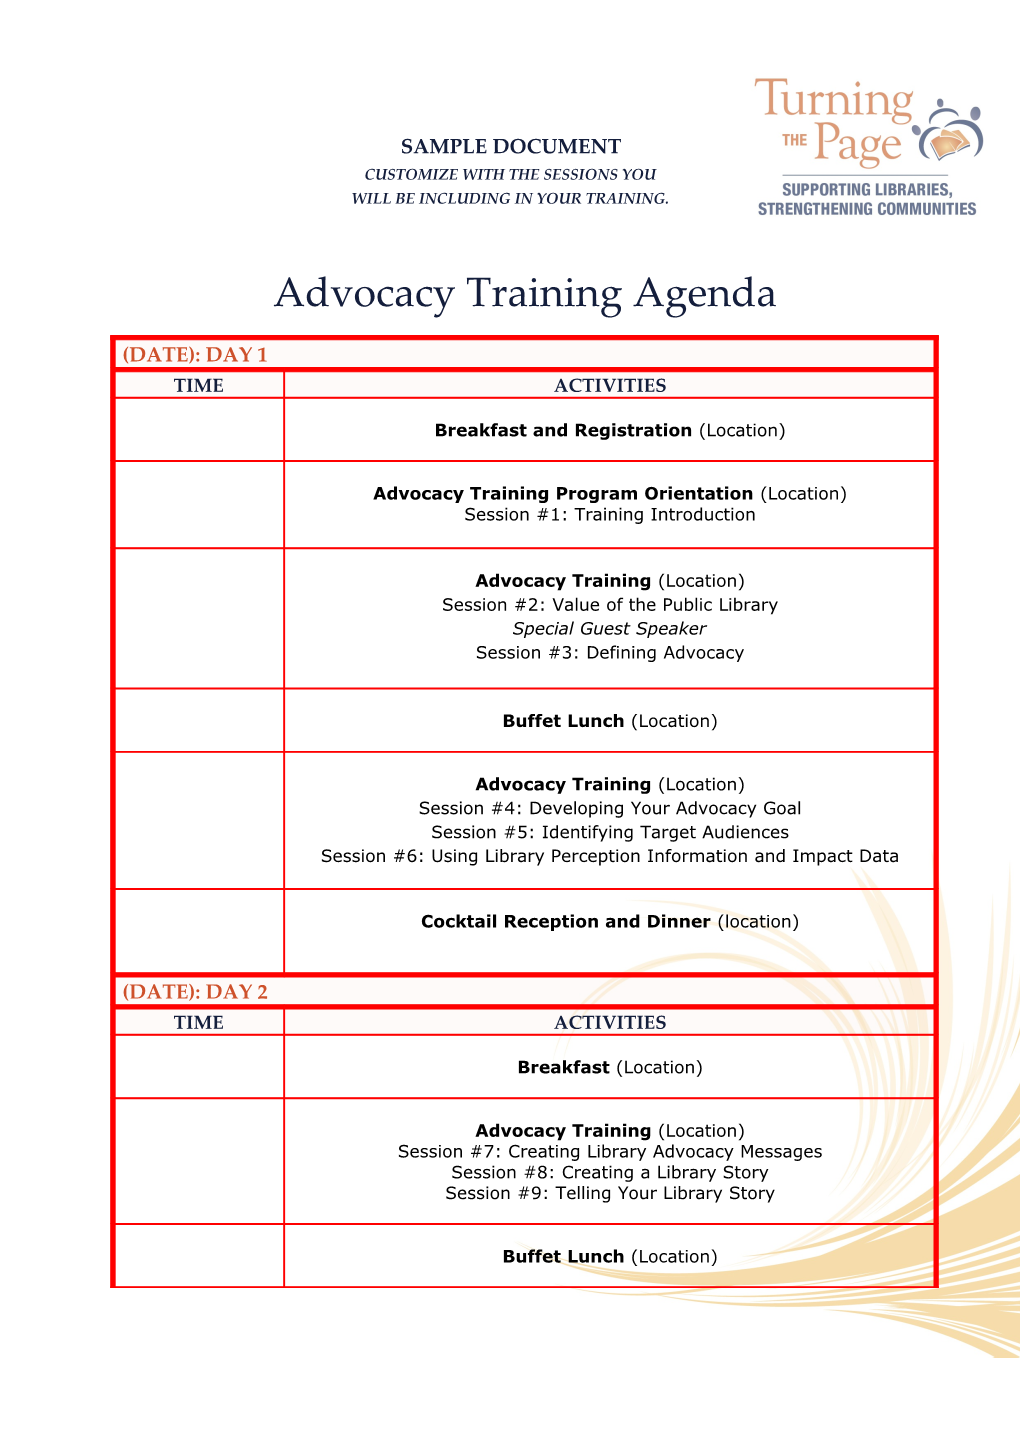 Advocacy Training Session Descriptions